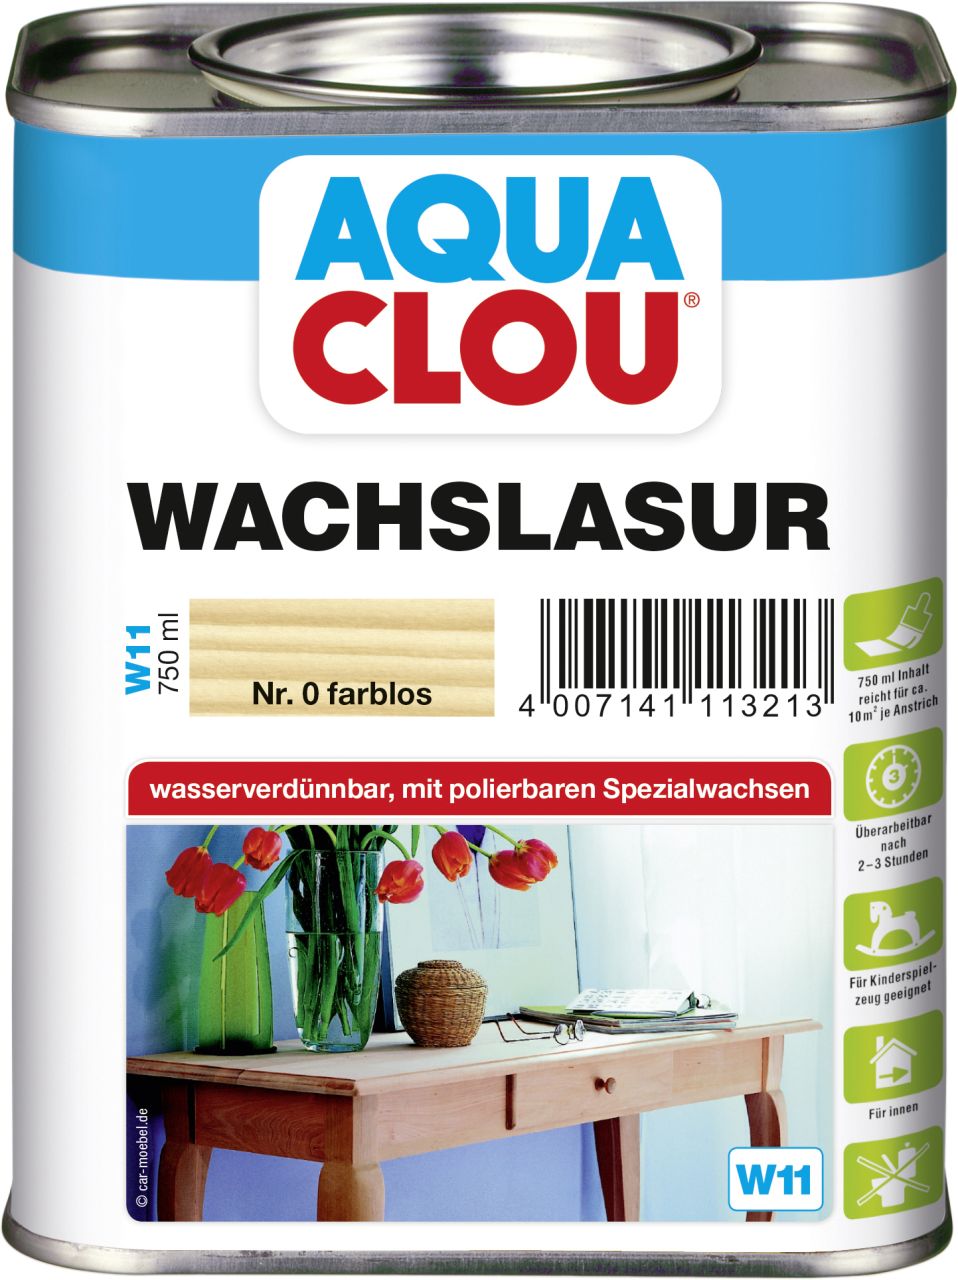 Aqua Clou Wachslasur 750 ml farblos von Aqua Clou